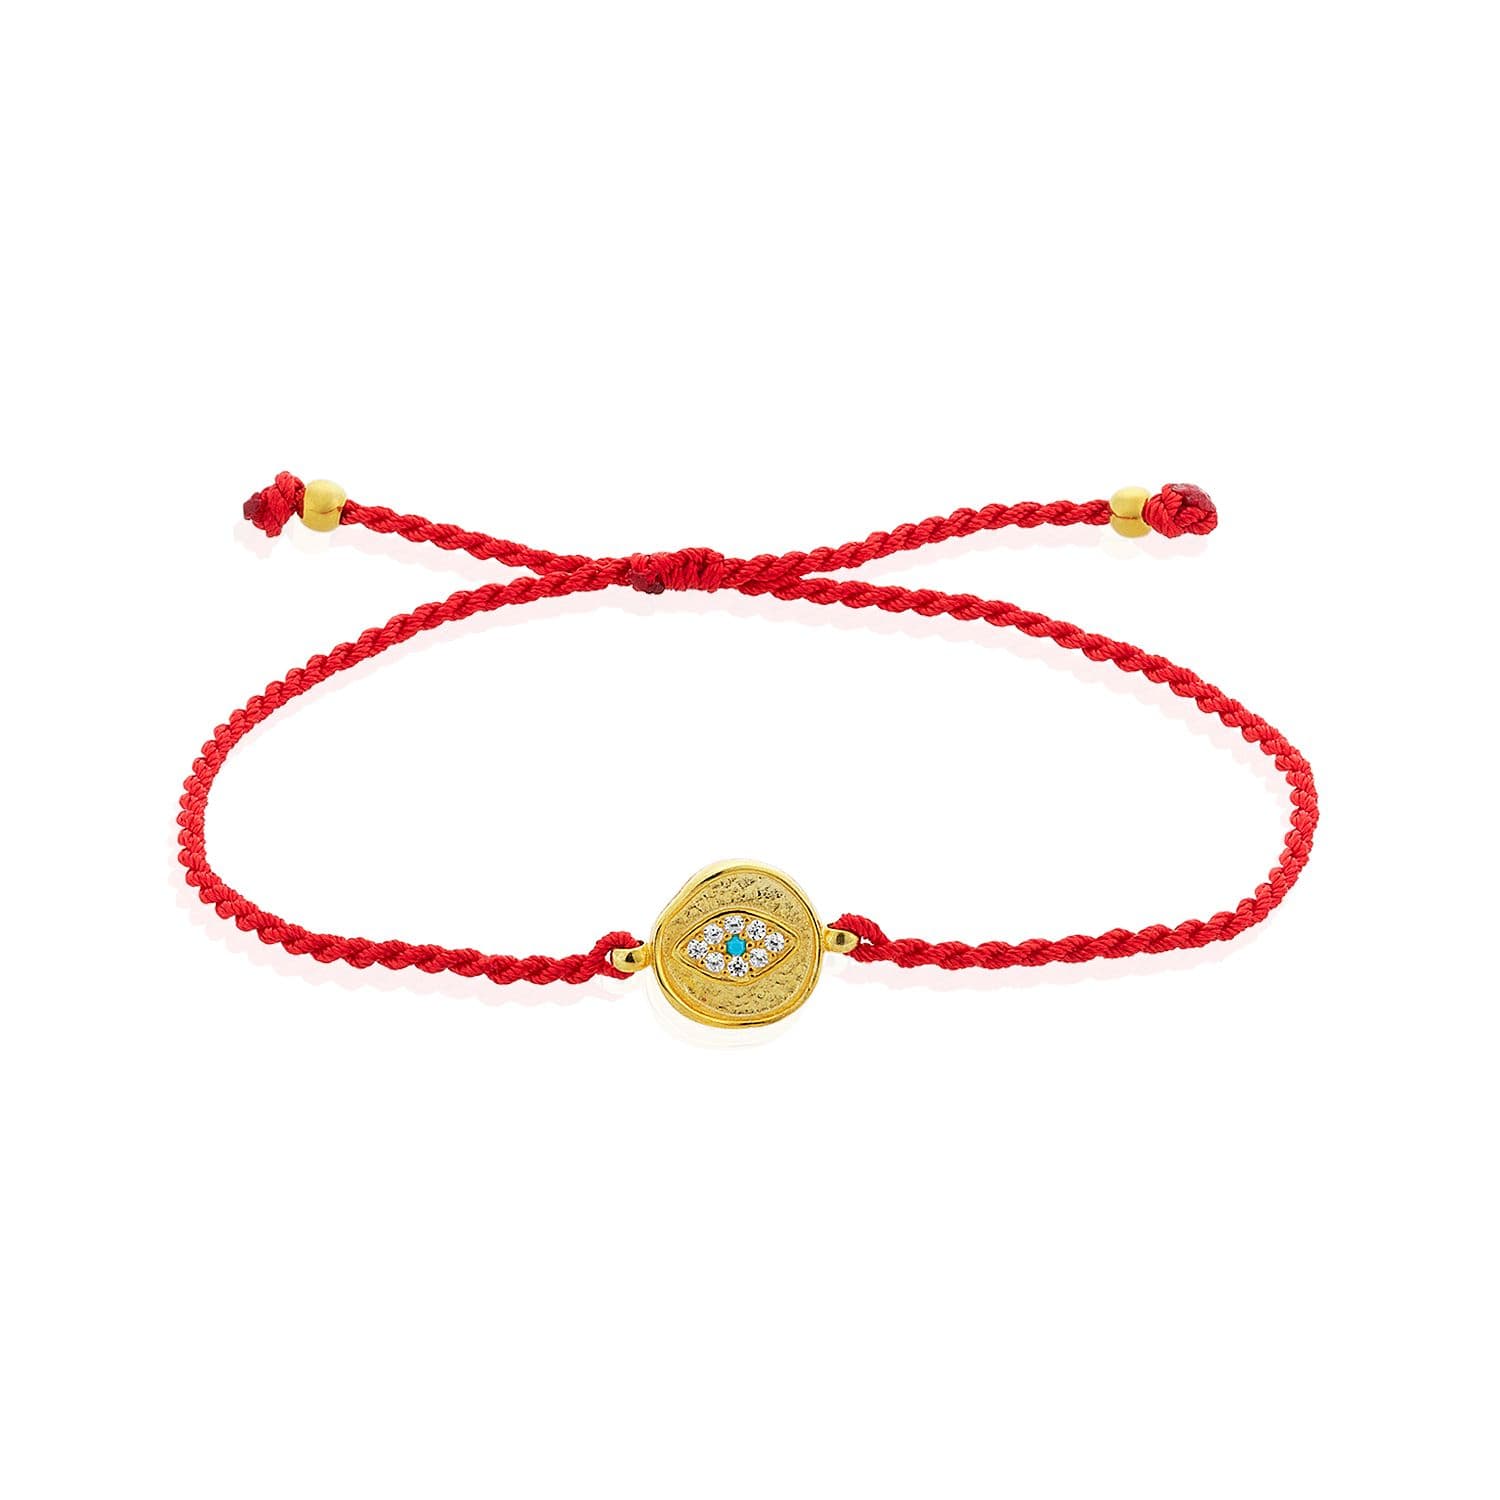 evil eye red string bracelet one size fits all